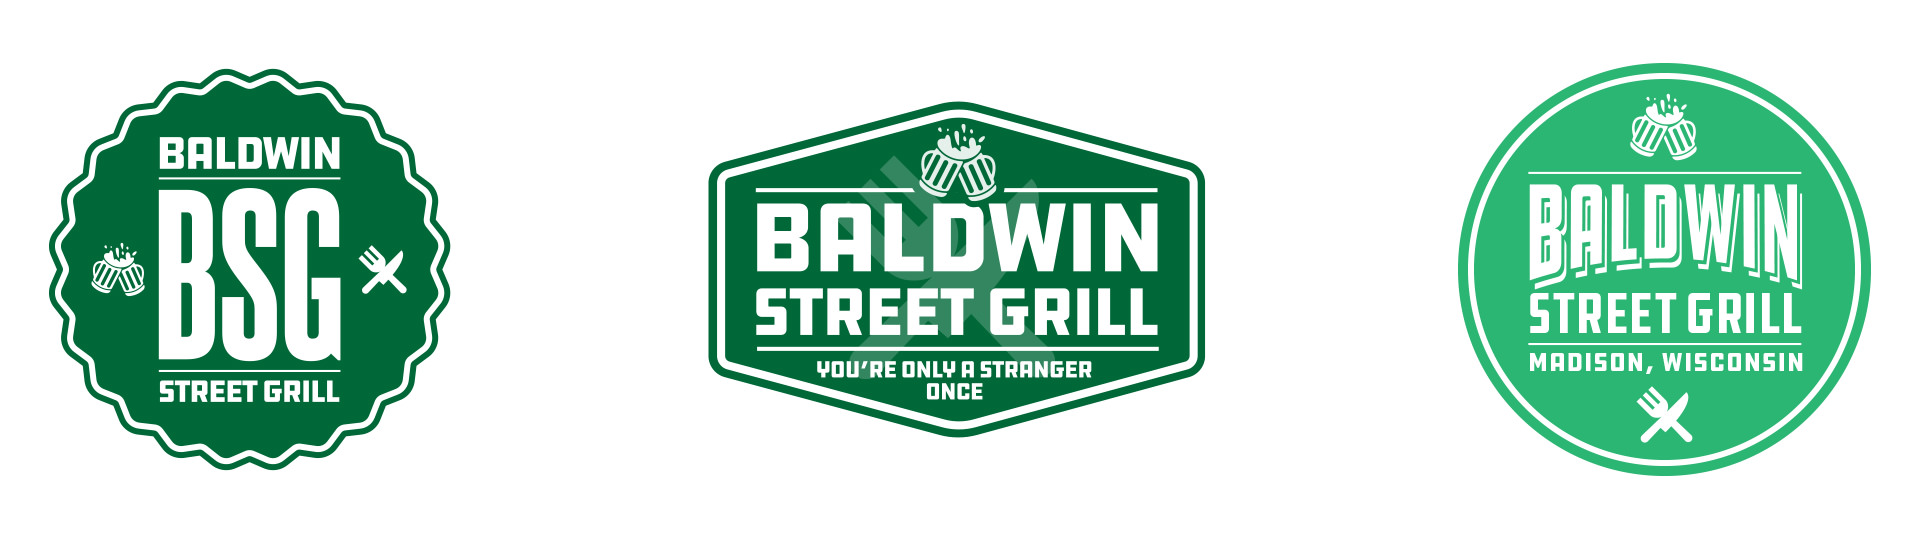 Baldwin Street Grill logo